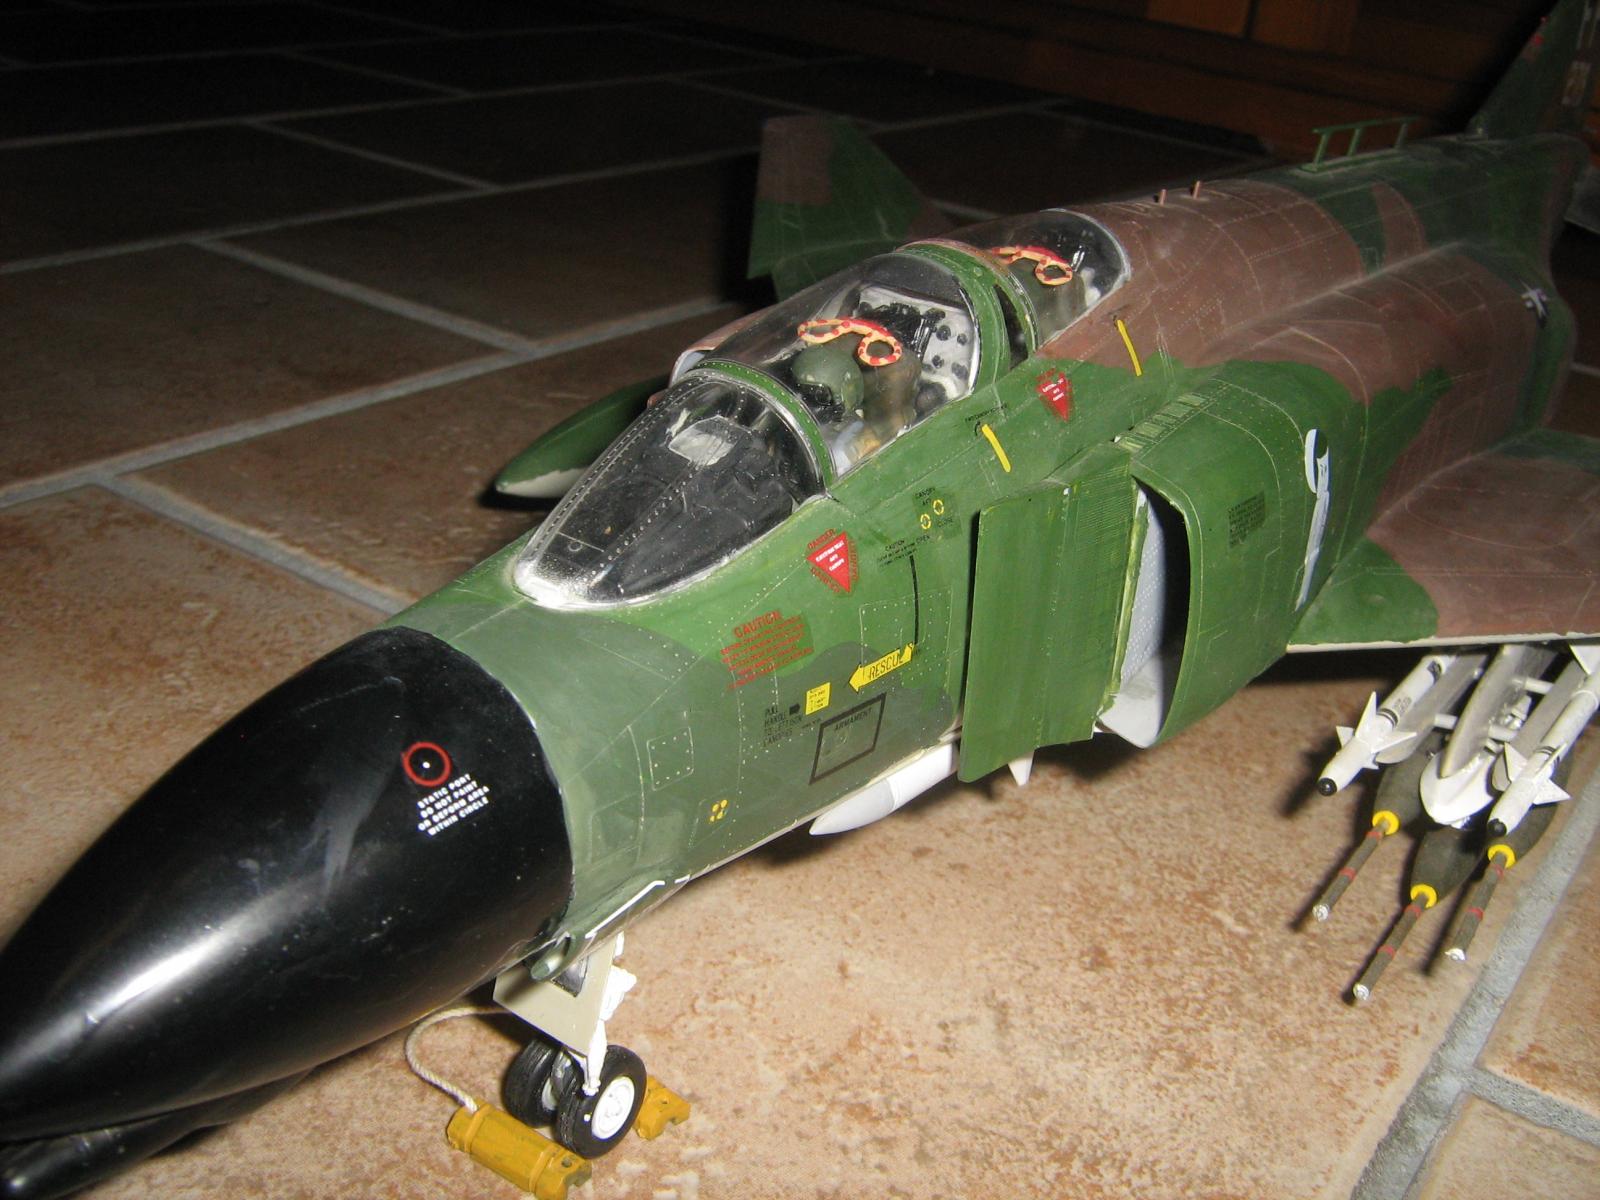  F-4D Phantom II " TERRIBLE TYKE" 497th TFS, 8th TFW; Ubon 1972 (da interdizione notturna)